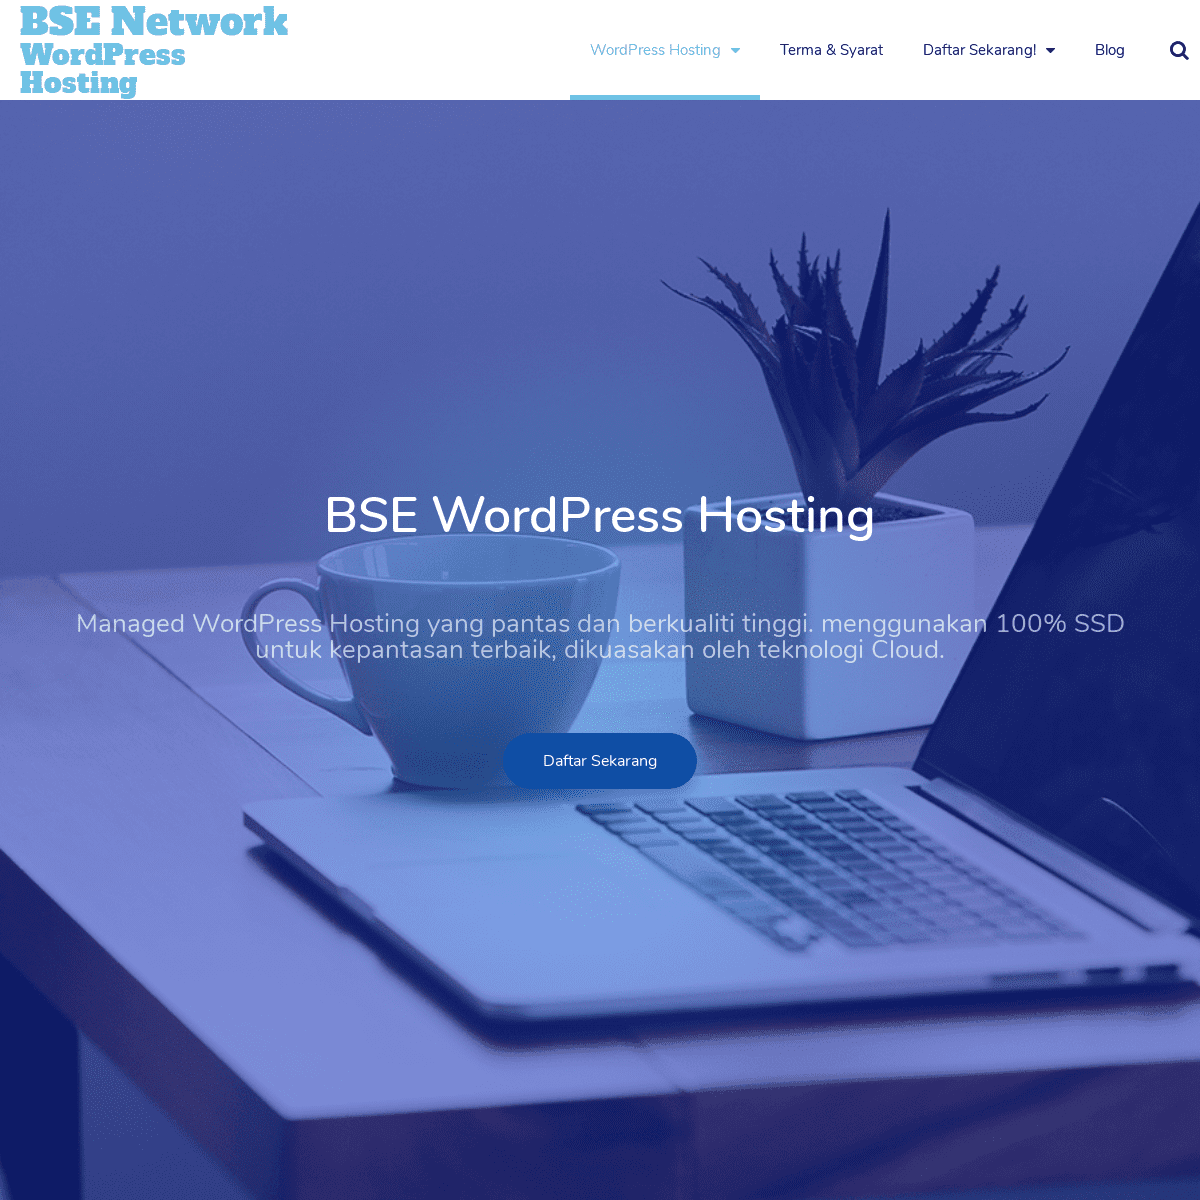 Wordpress Hosting BSE Network - BSE Network